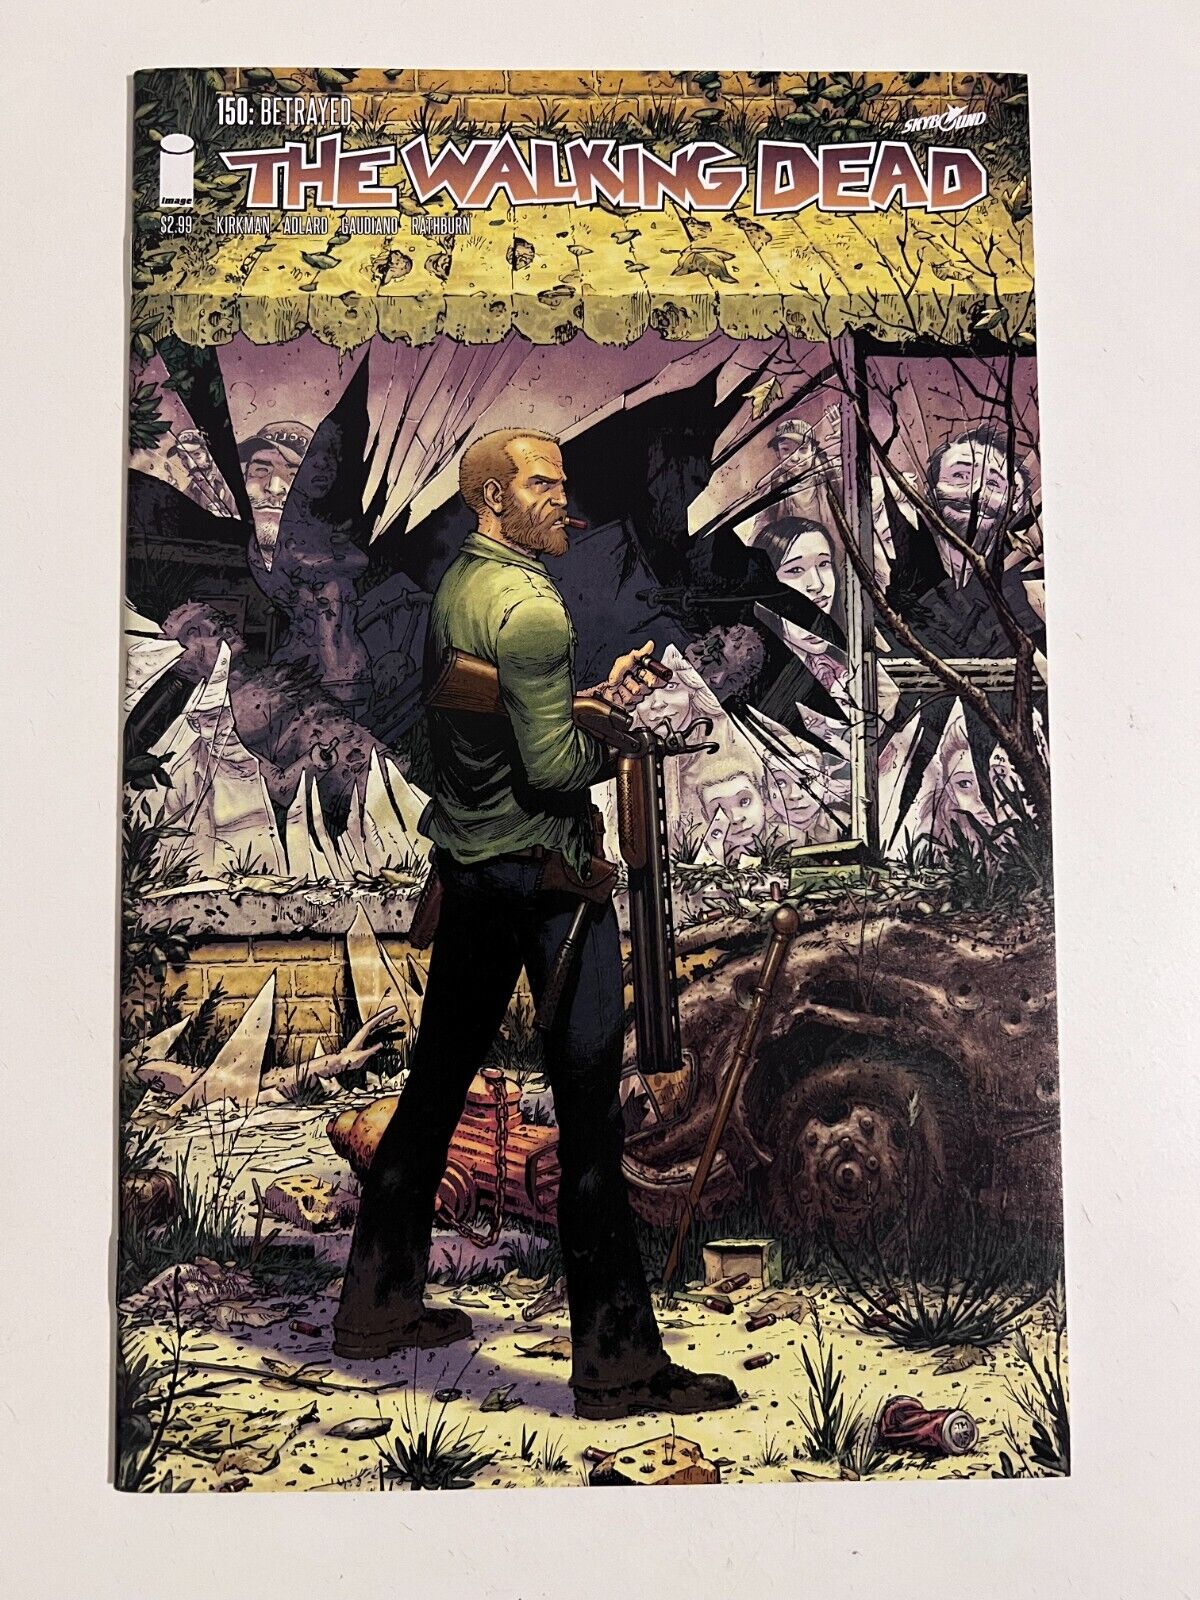 Walking Dead #150 Tony Moore Variant